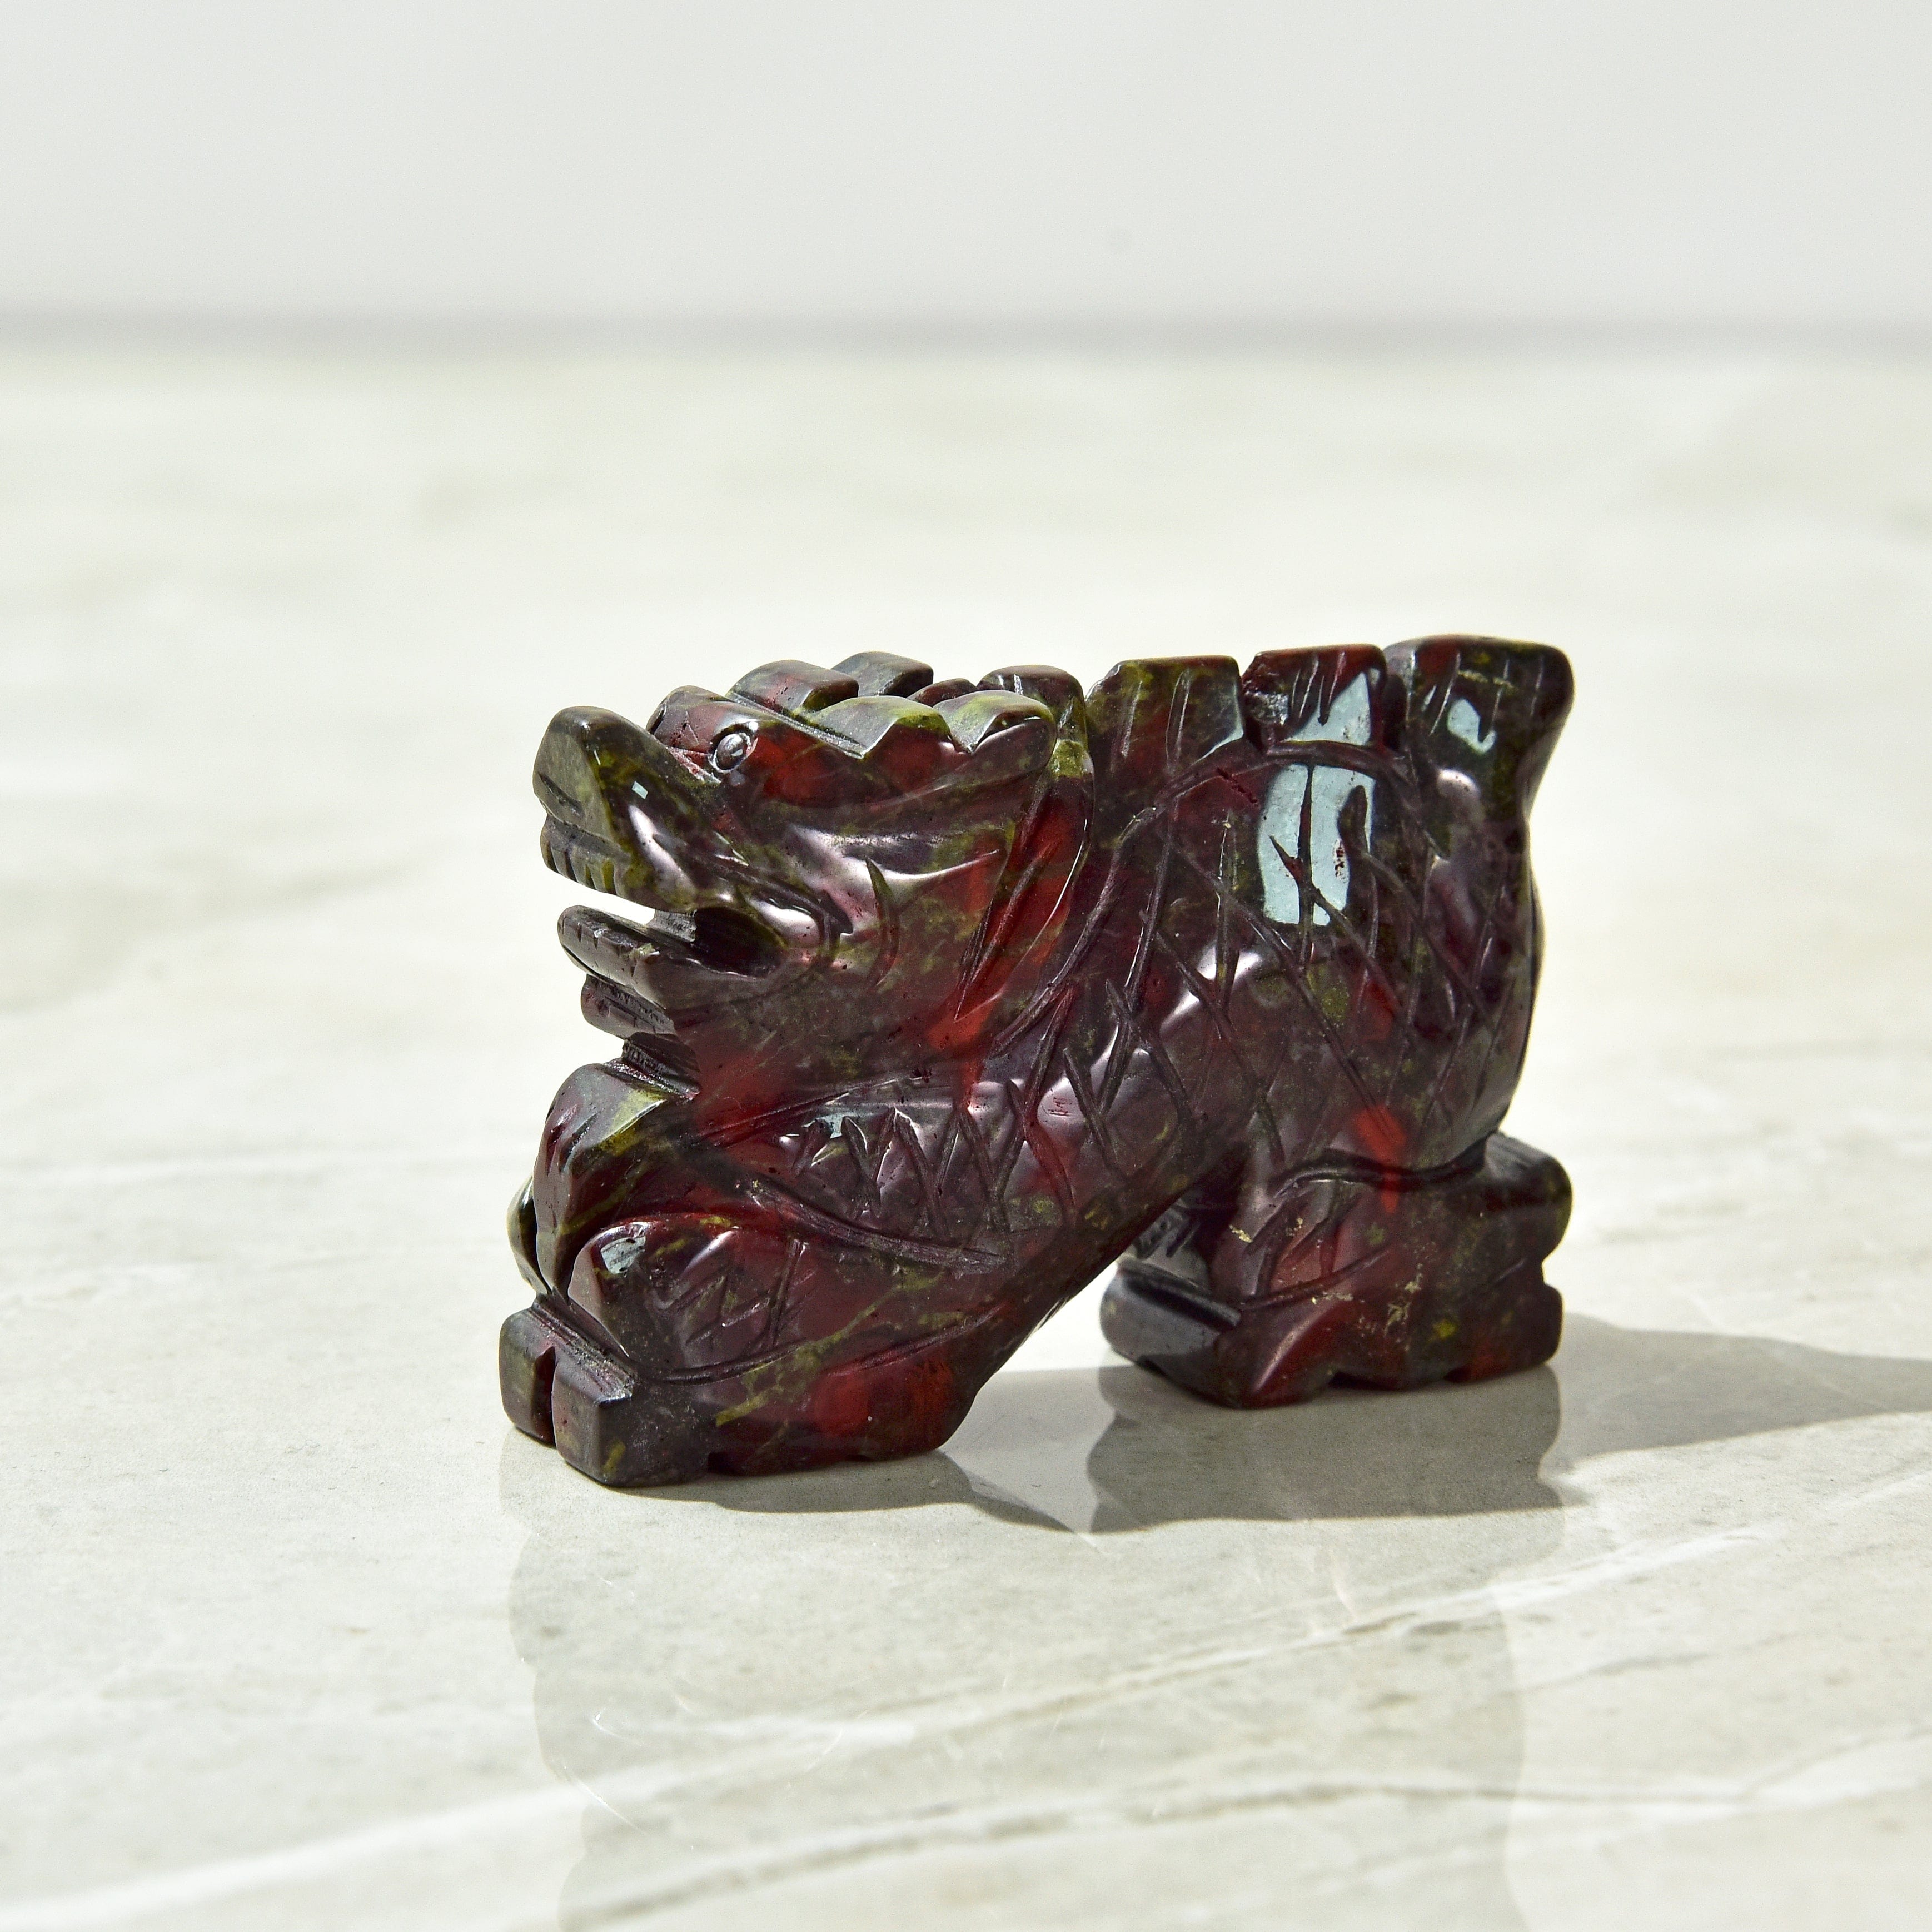 KALIFANO Gemstone Carvings 2.5" Bloodstone Dragon Natural Gemstone Carving CV30-D-BS